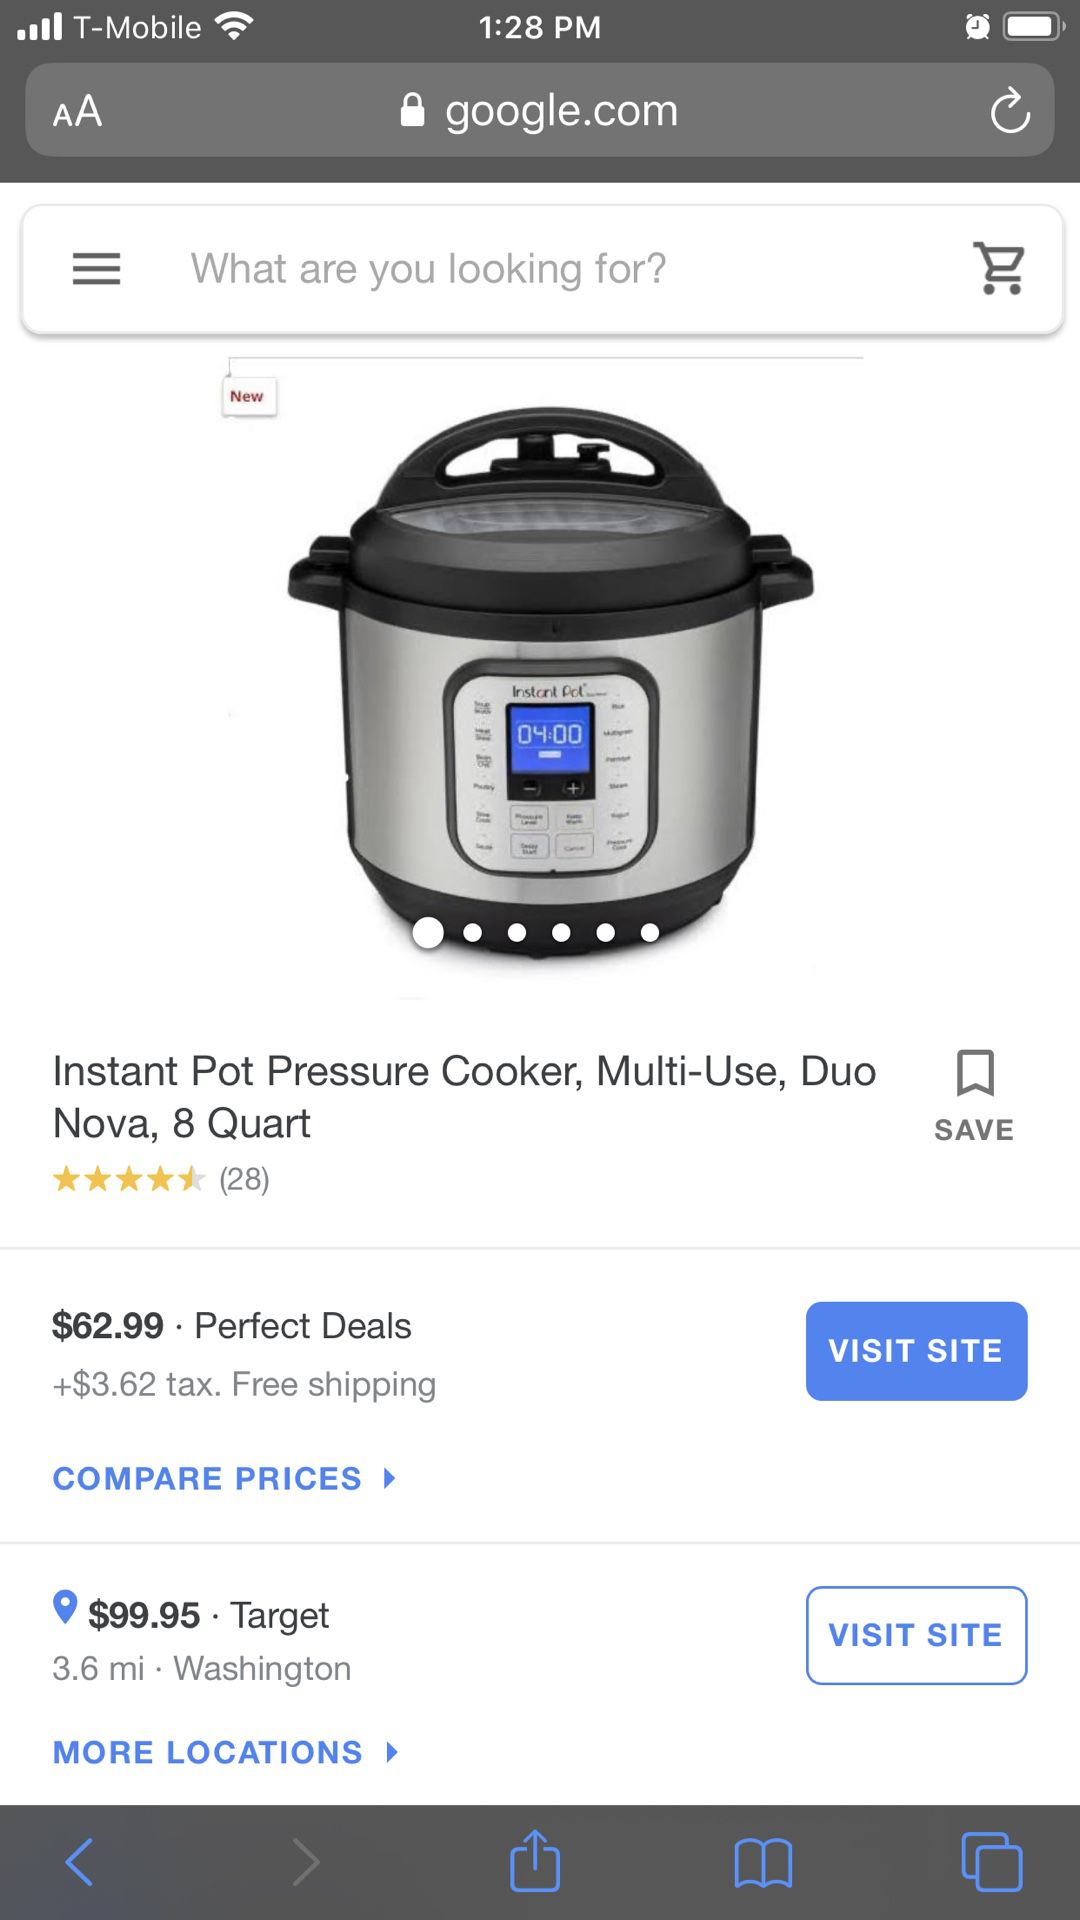 Instant Pot Duo